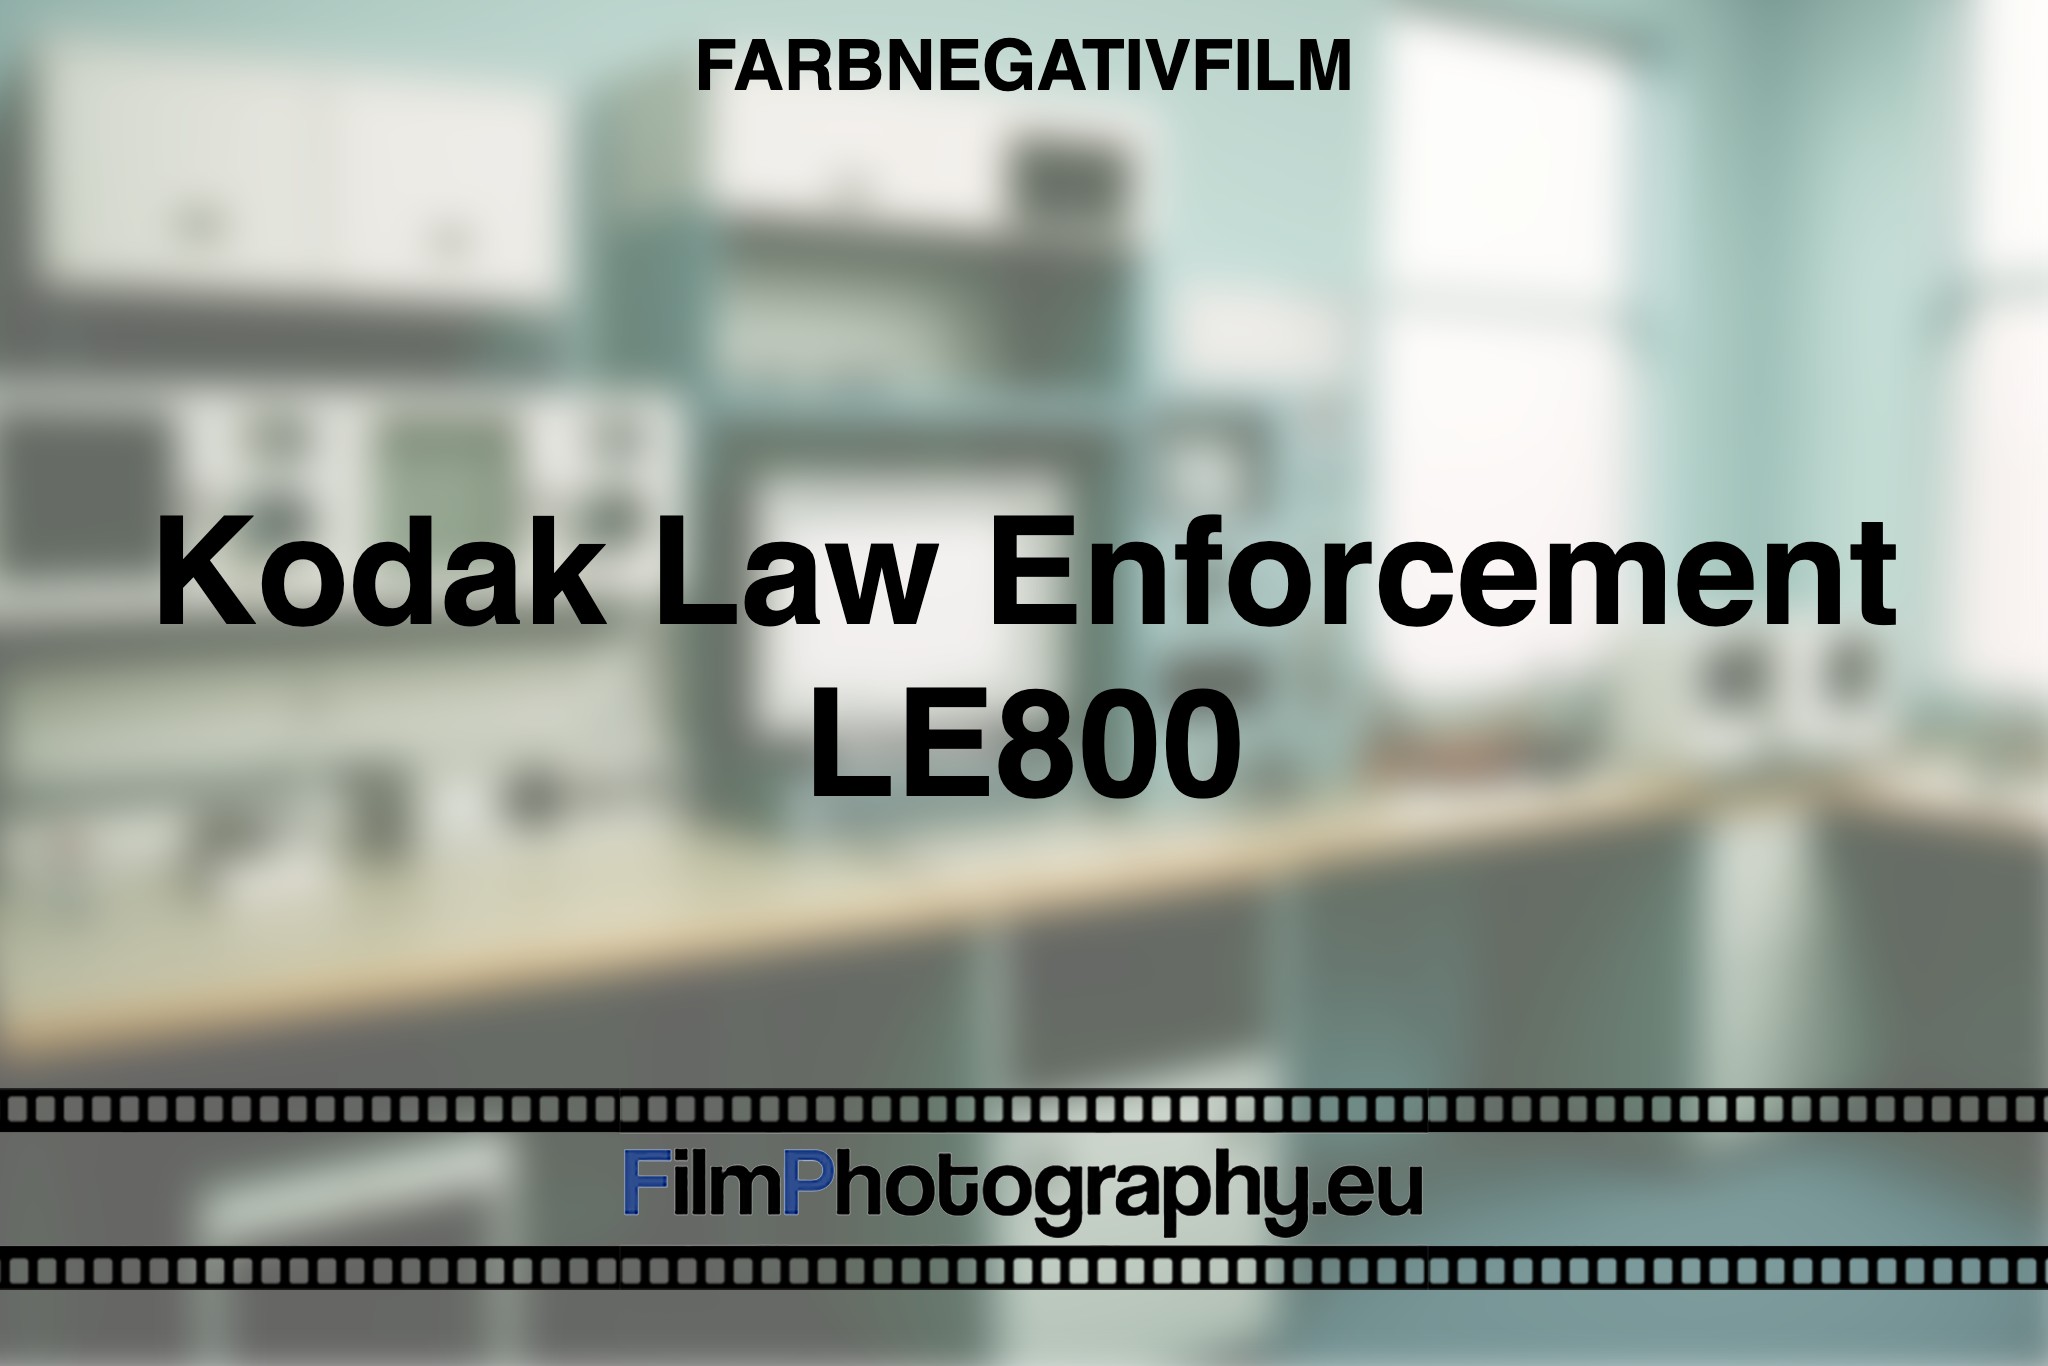 Kodak-Law-Enforcement-LE800-Farbnegativfilm-bnv